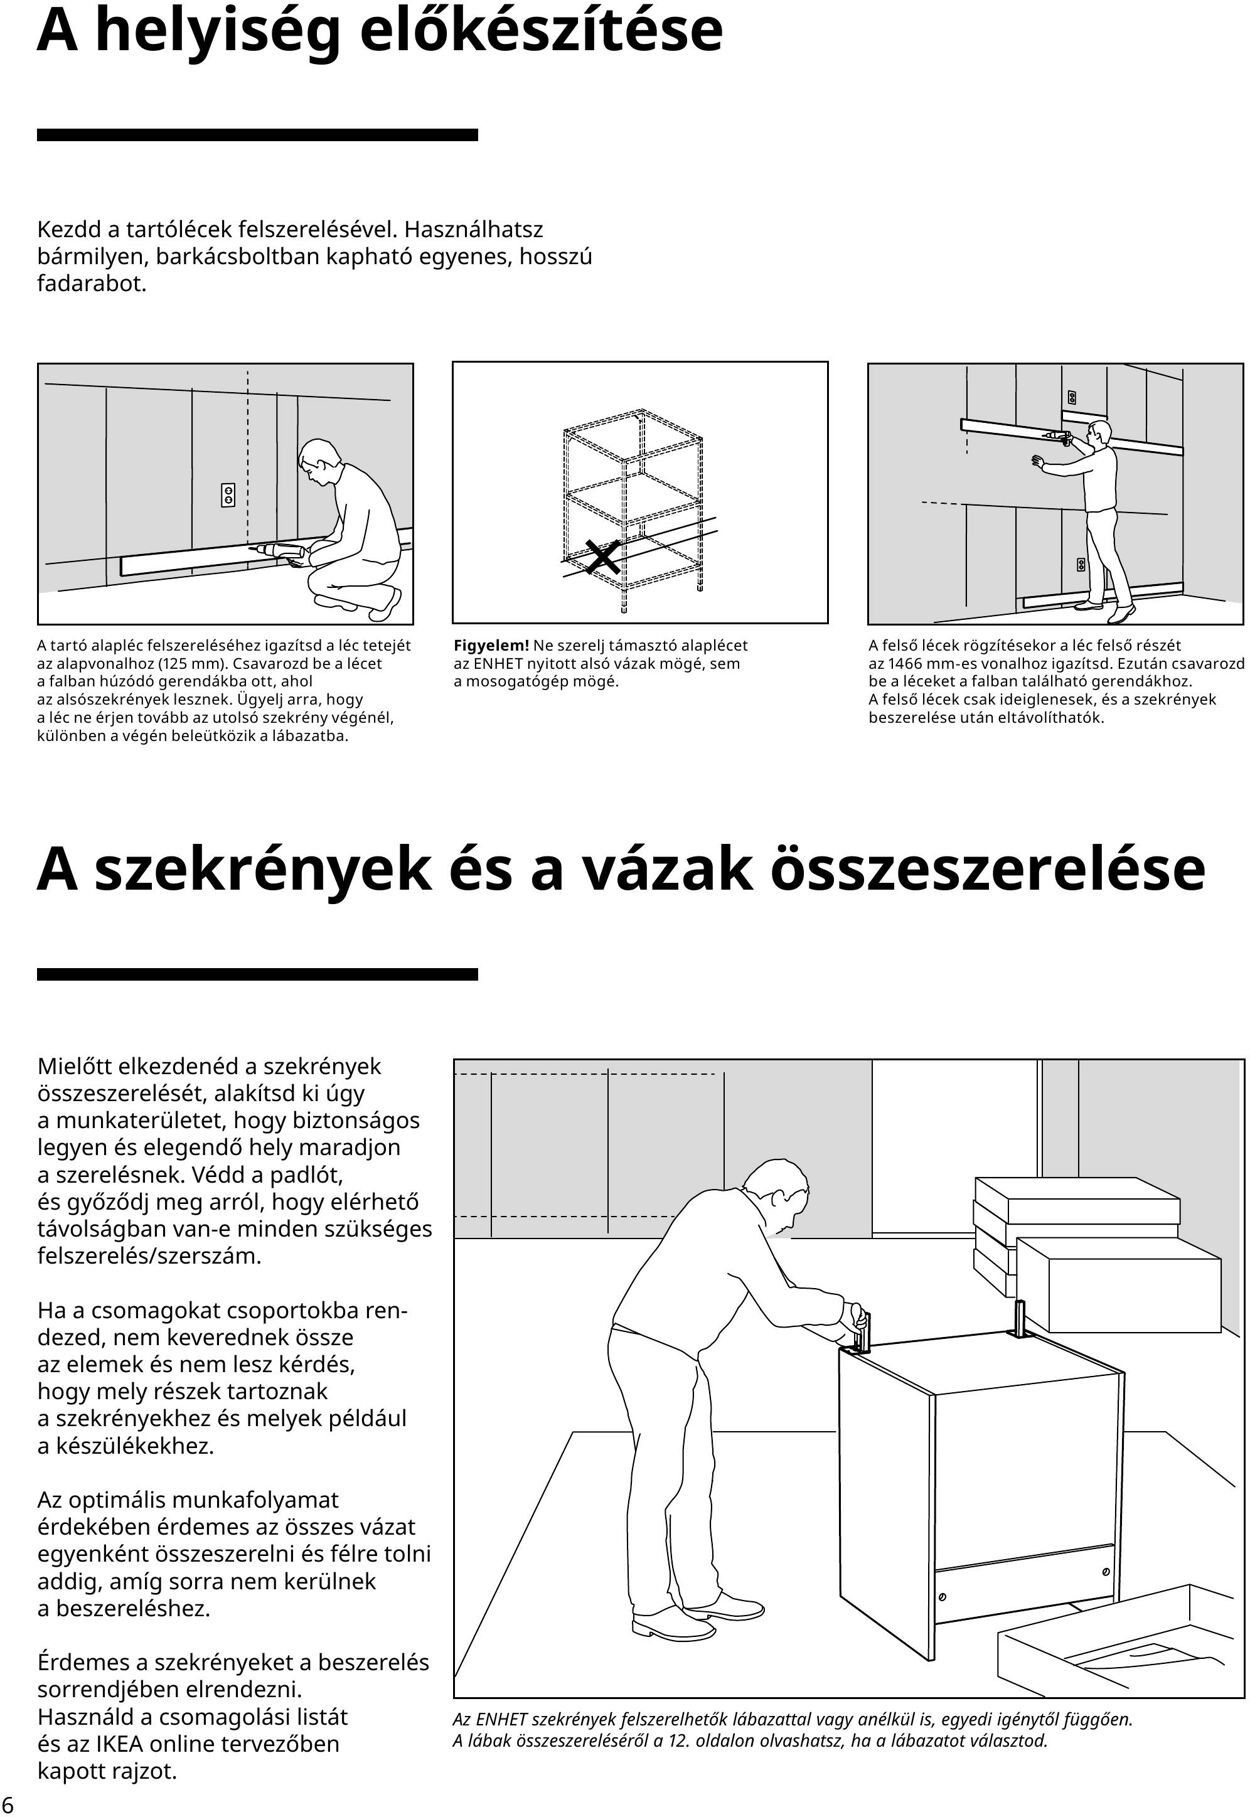 Flyer Ikea 01.01.2022 - 31.12.2022